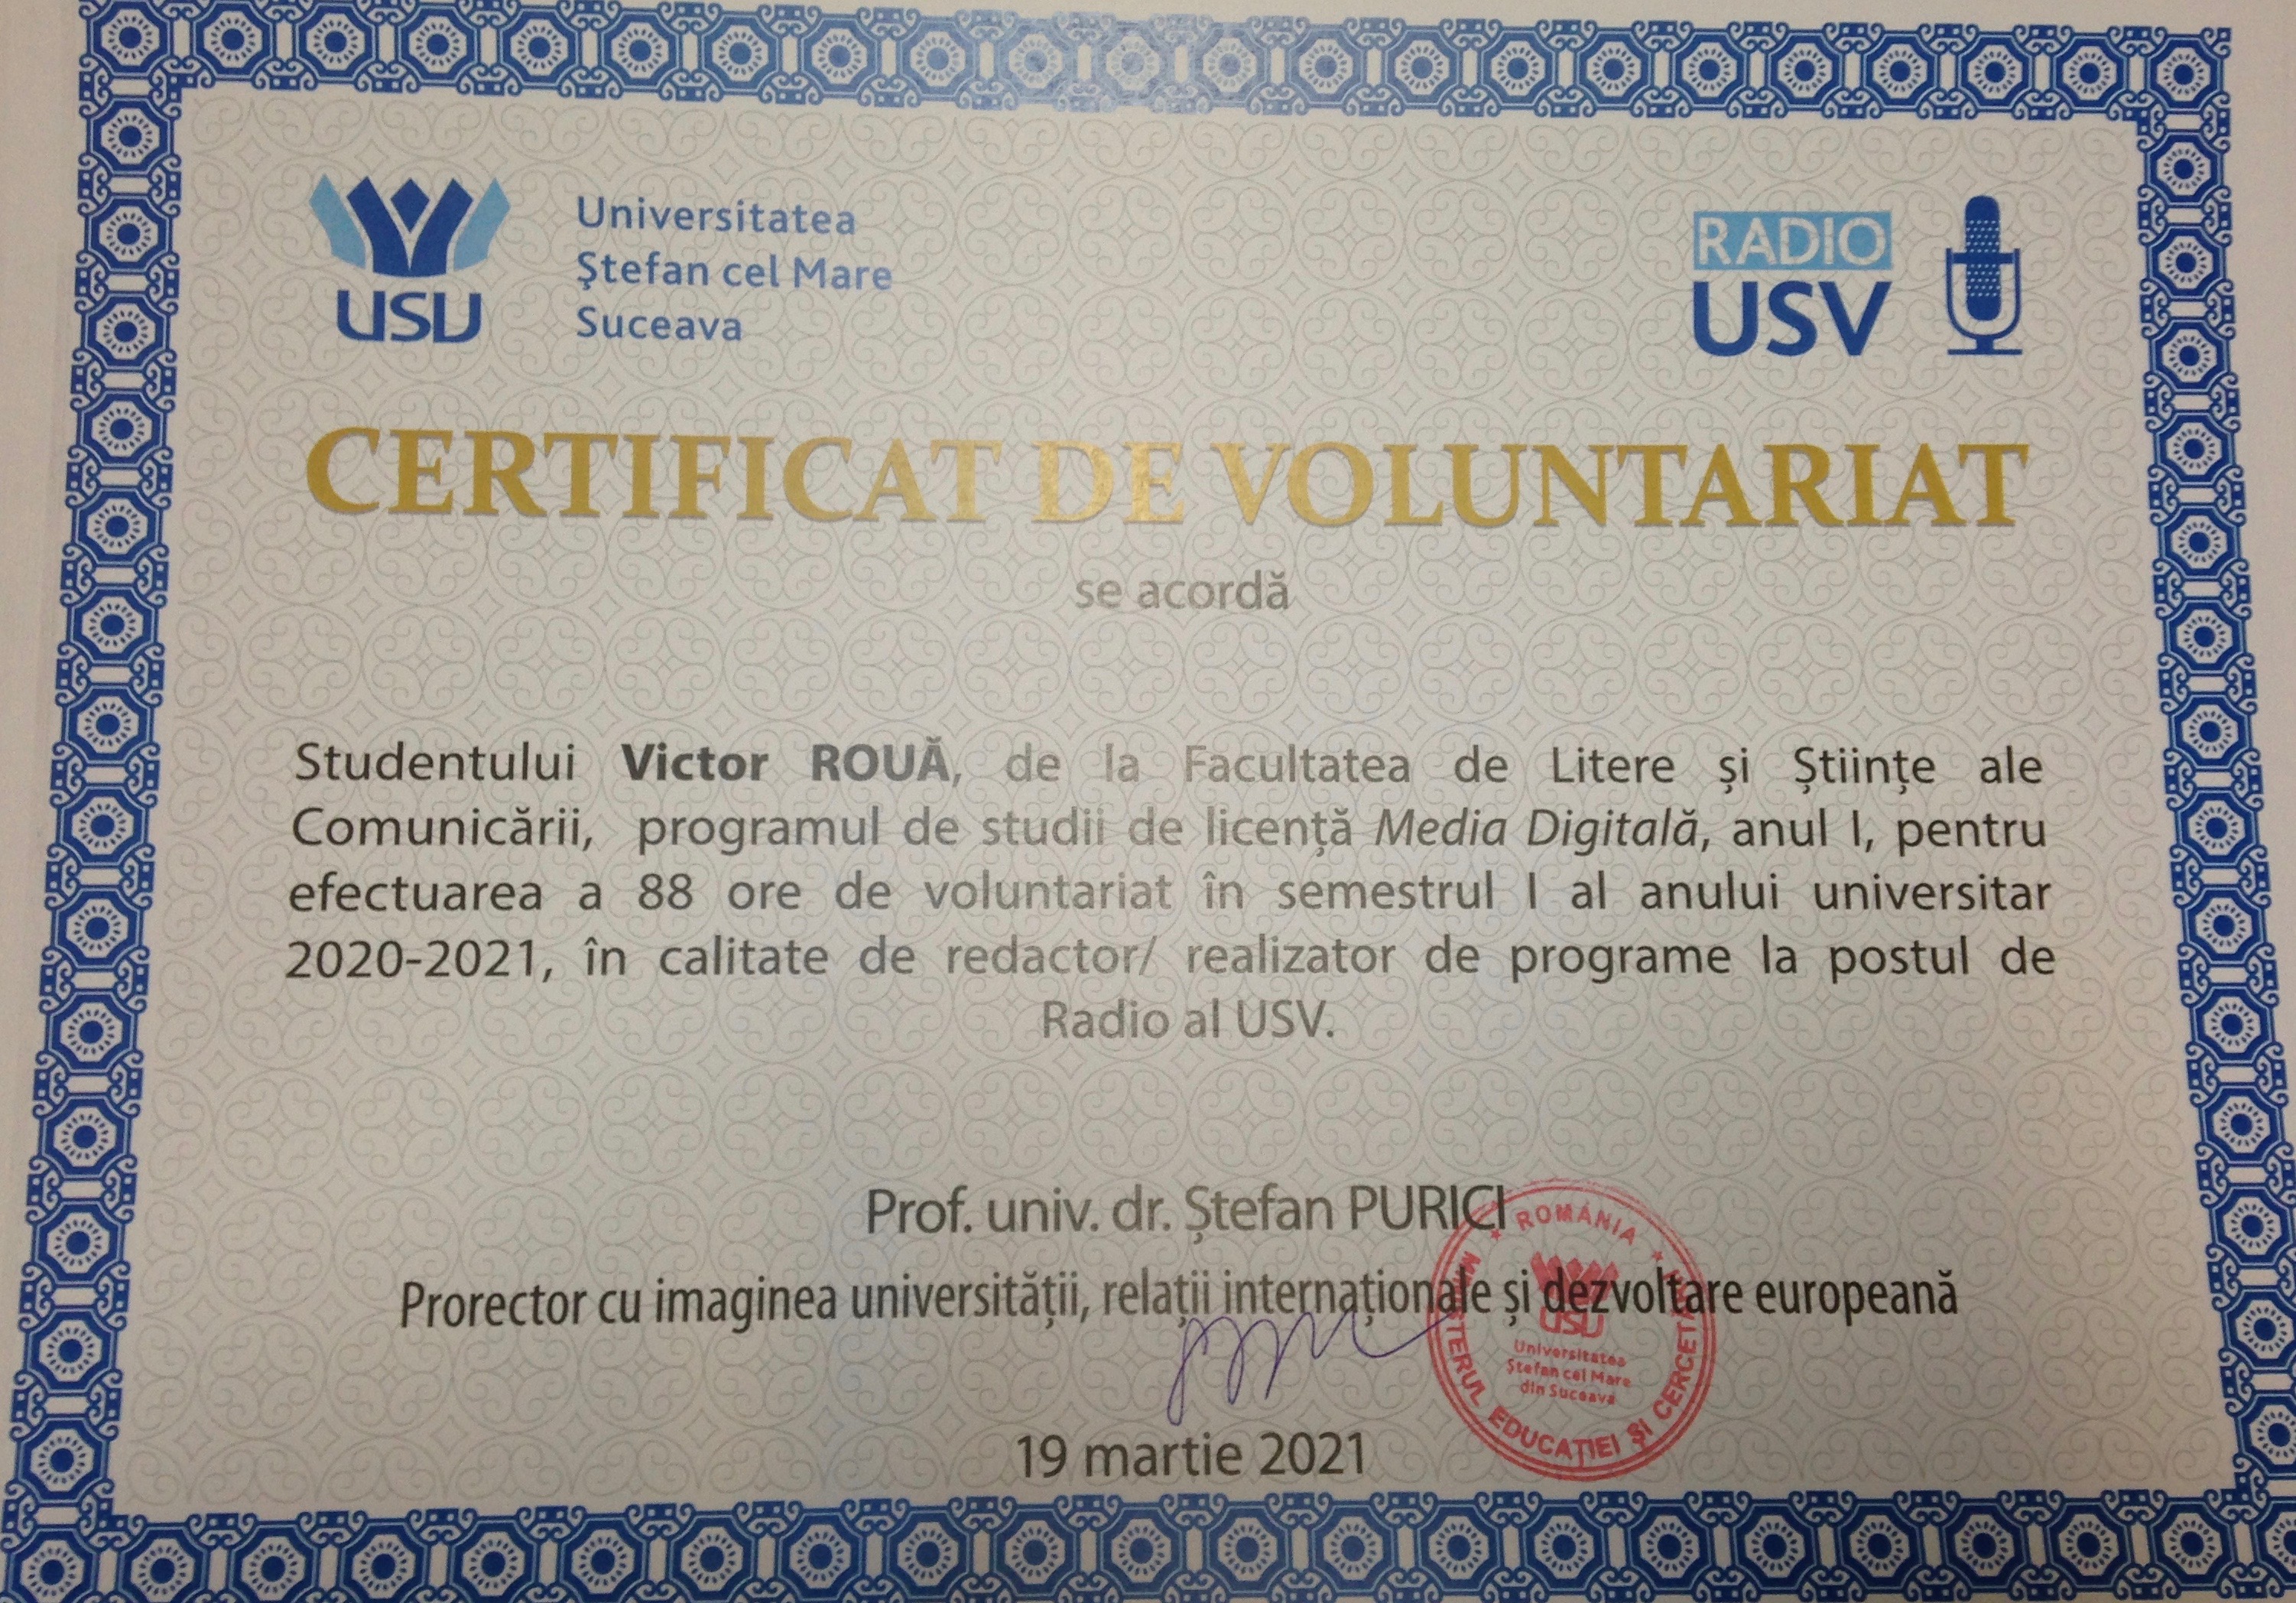 USV radio certificate.jpg